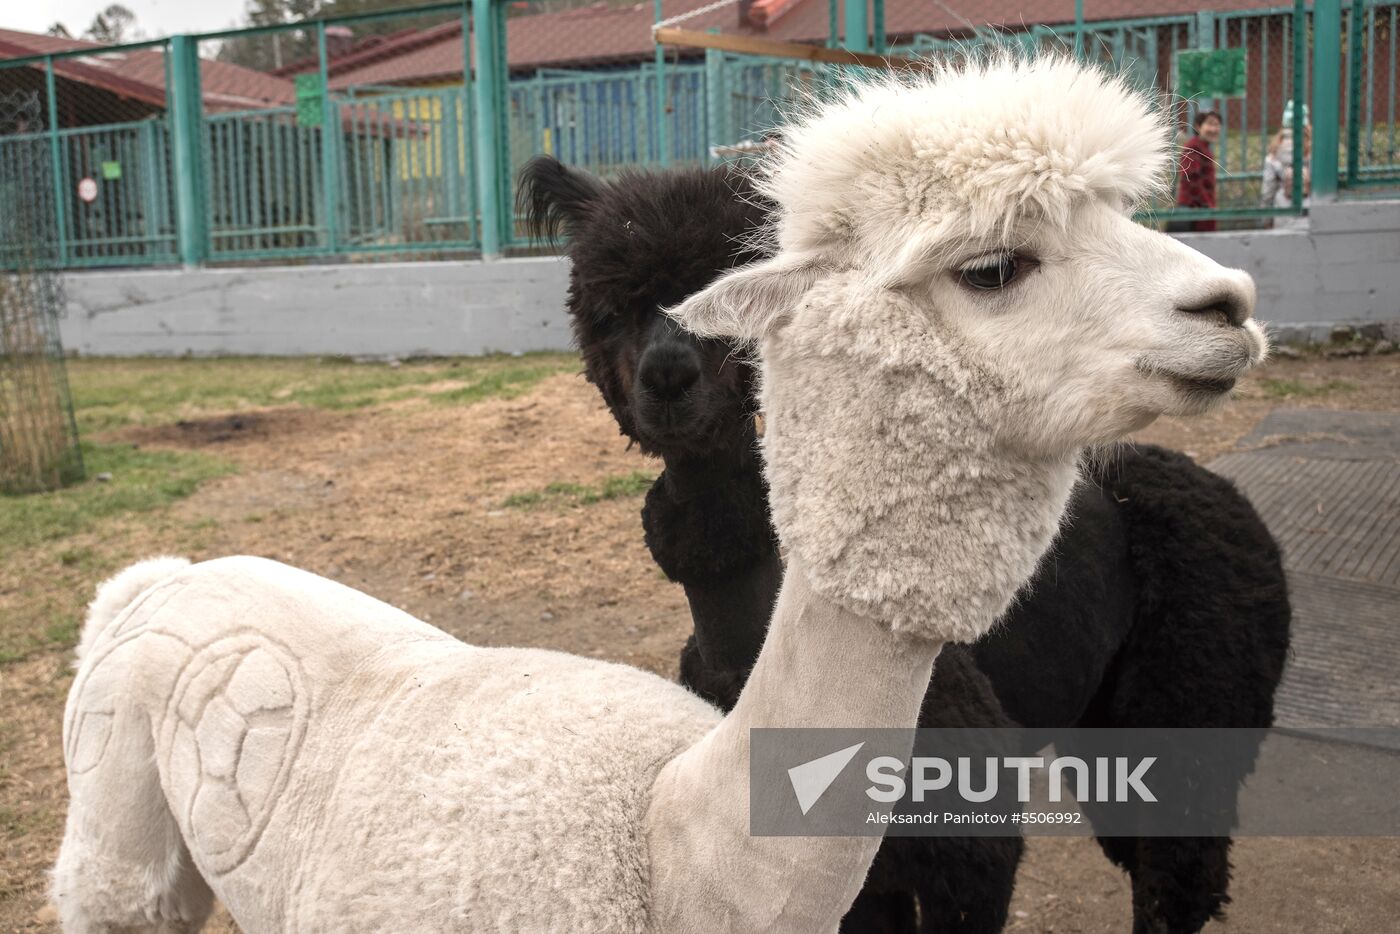 Design shaved into alpaca's fur for 2018 Word Cup at Krasnoyarsk zoo